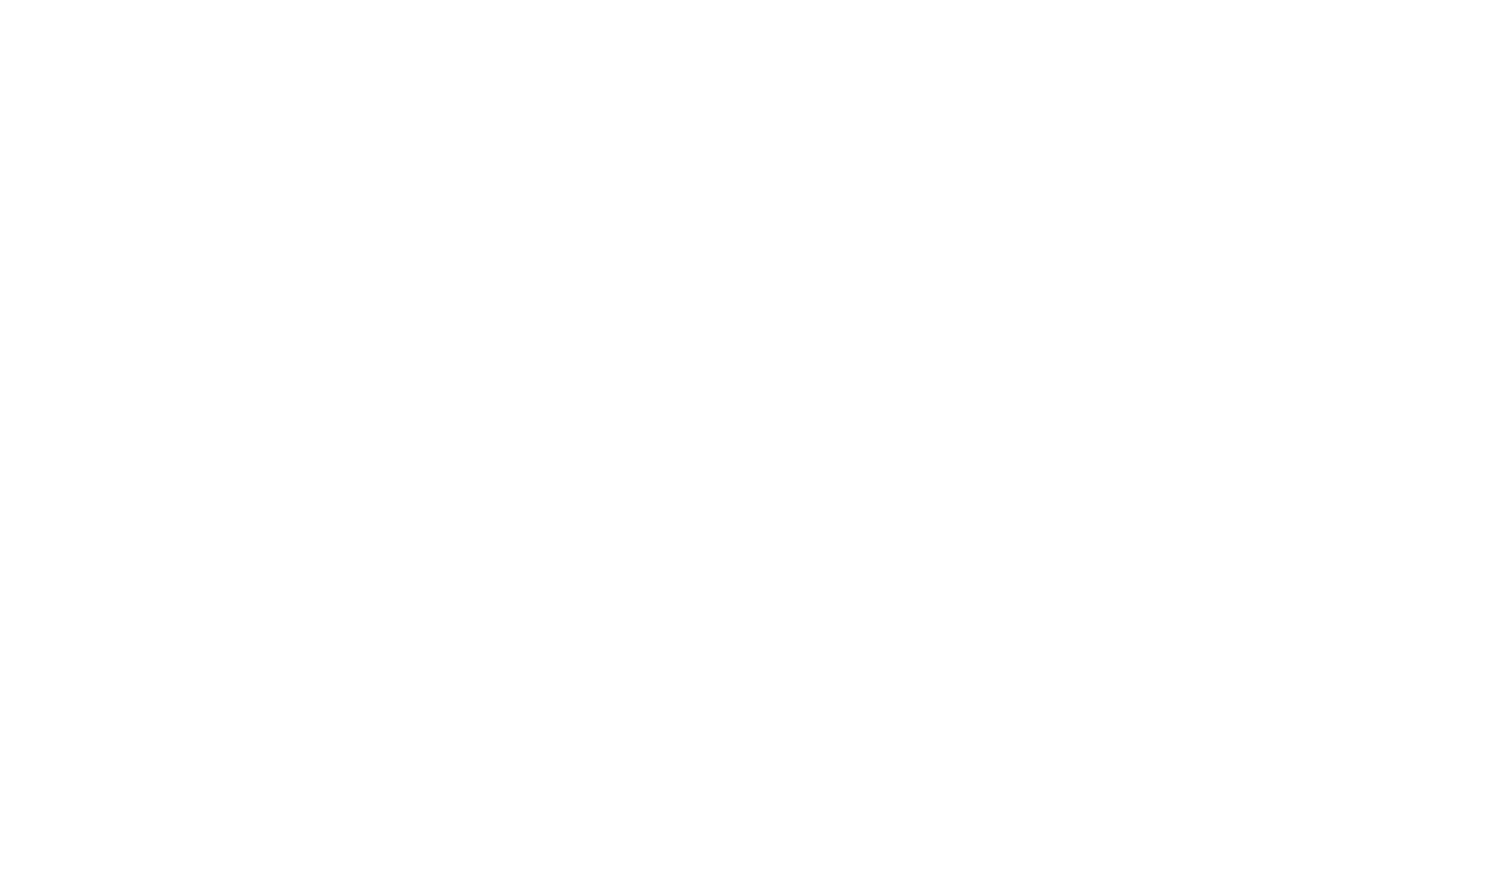 Fruit of the Womb. LA